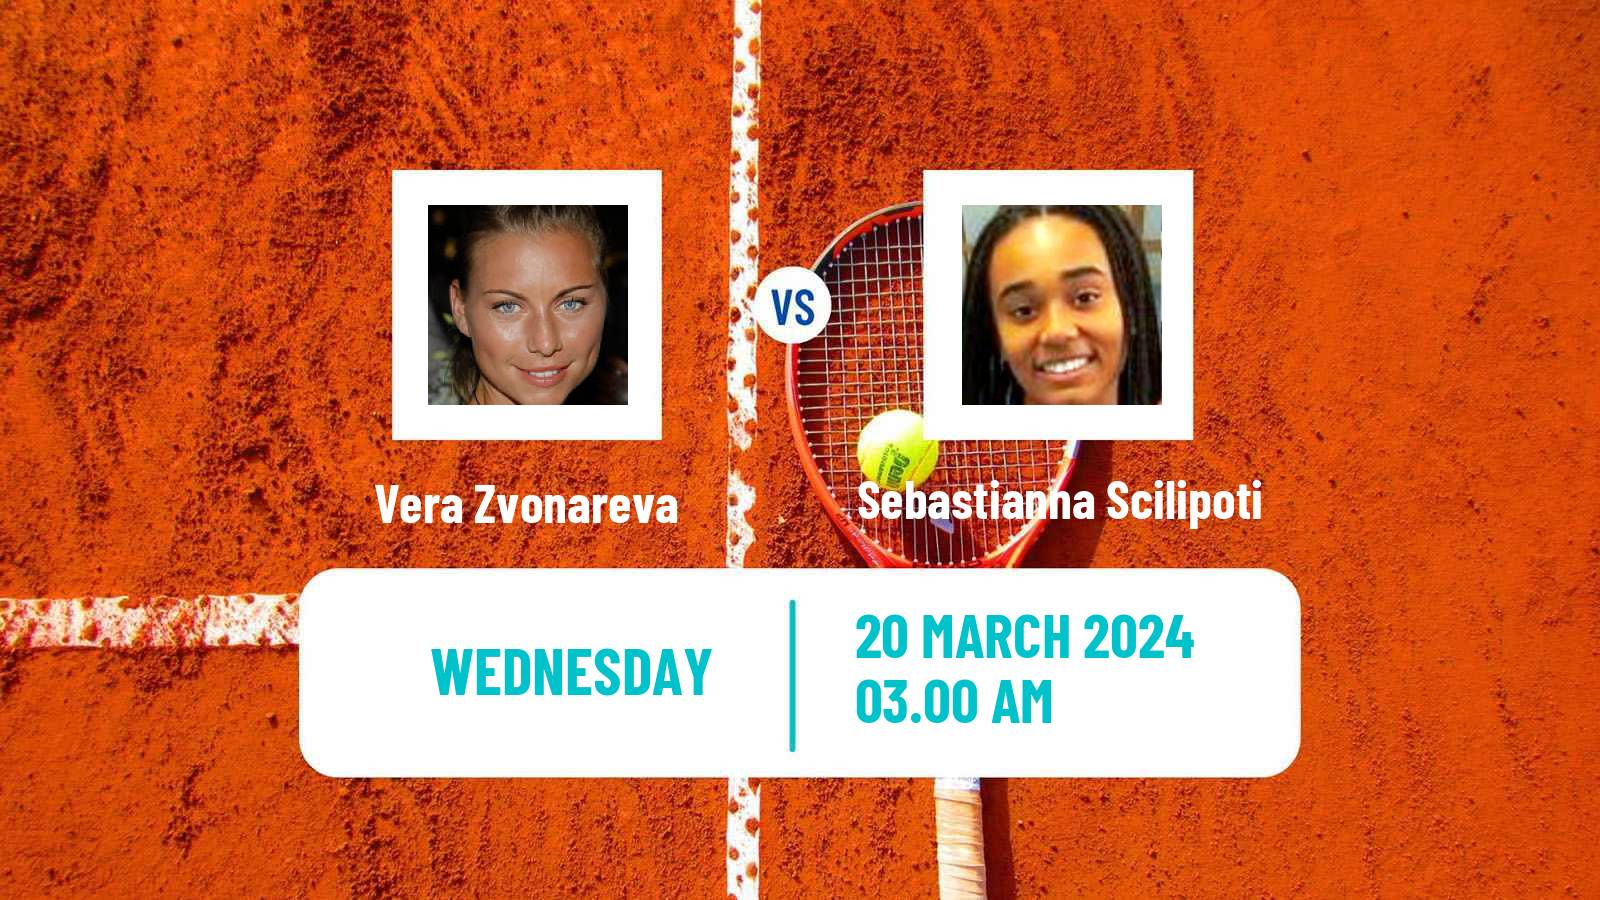 Tennis ITF W35 Alaminos Larnaca 2 Women Vera Zvonareva - Sebastianna Scilipoti